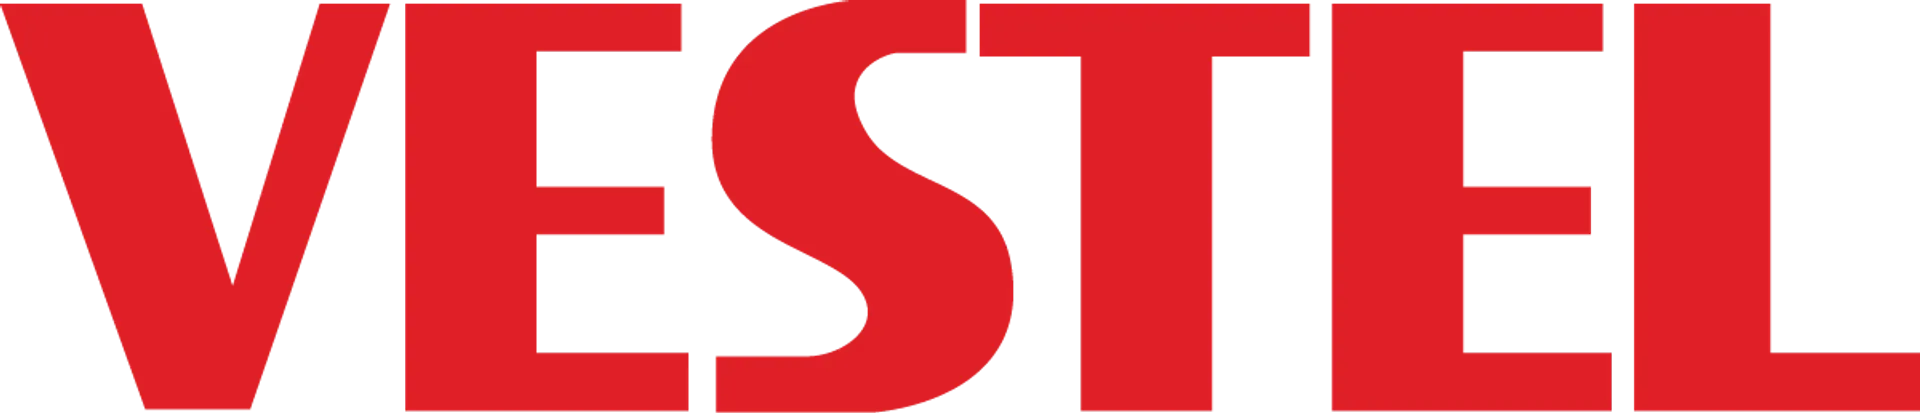 VESTEL logo